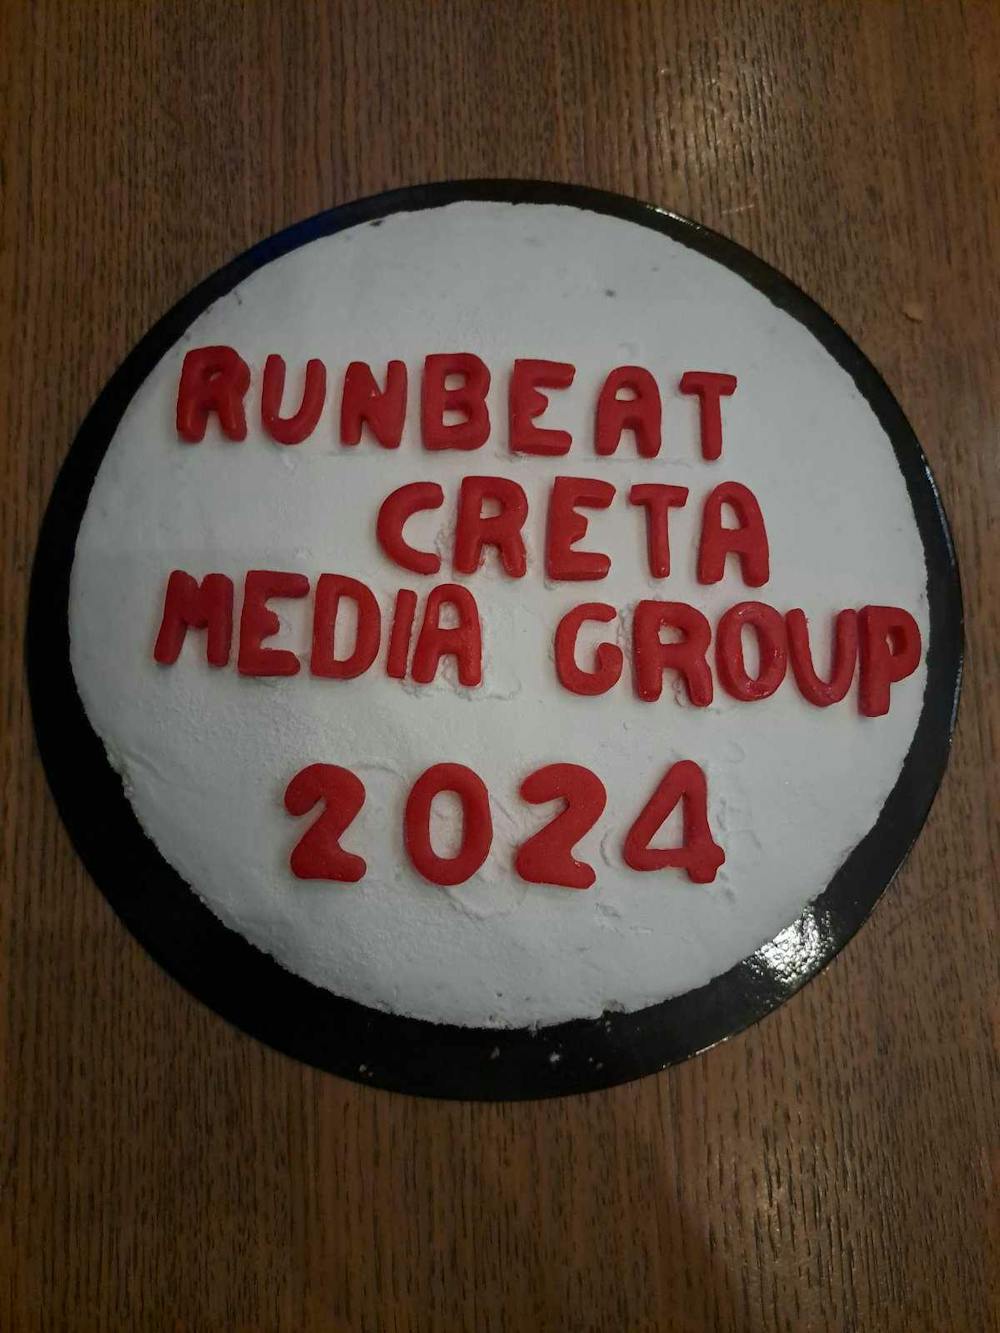 Oλυμπιακό έτος το 2024 και για την ομάδα του Runbeat runbeat.gr 